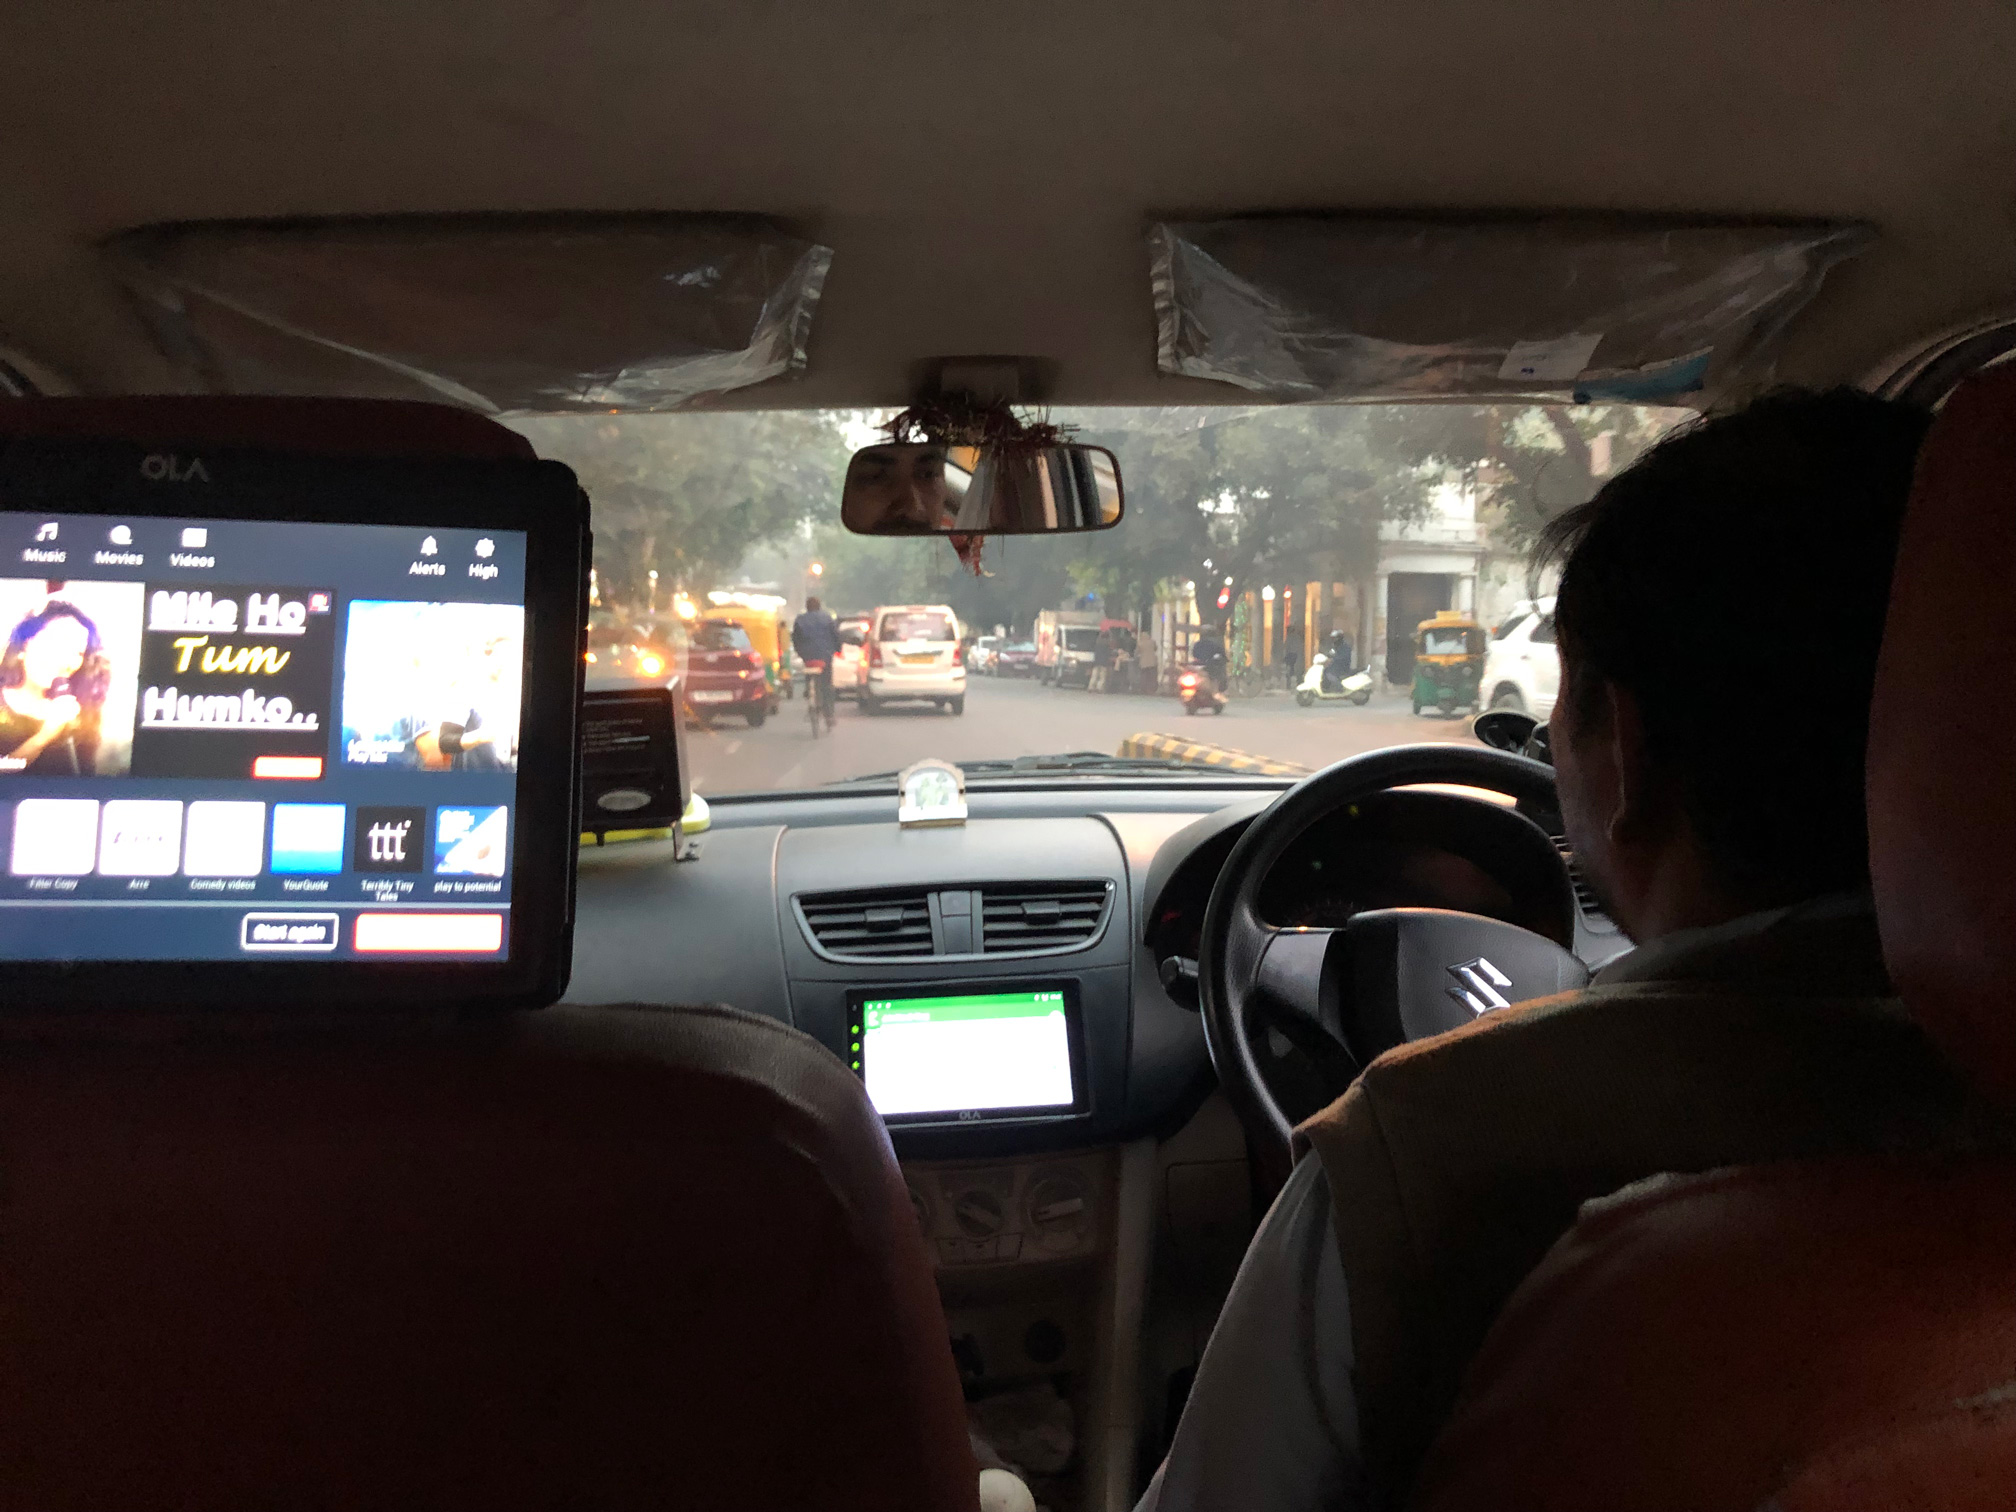 In an Ola cab